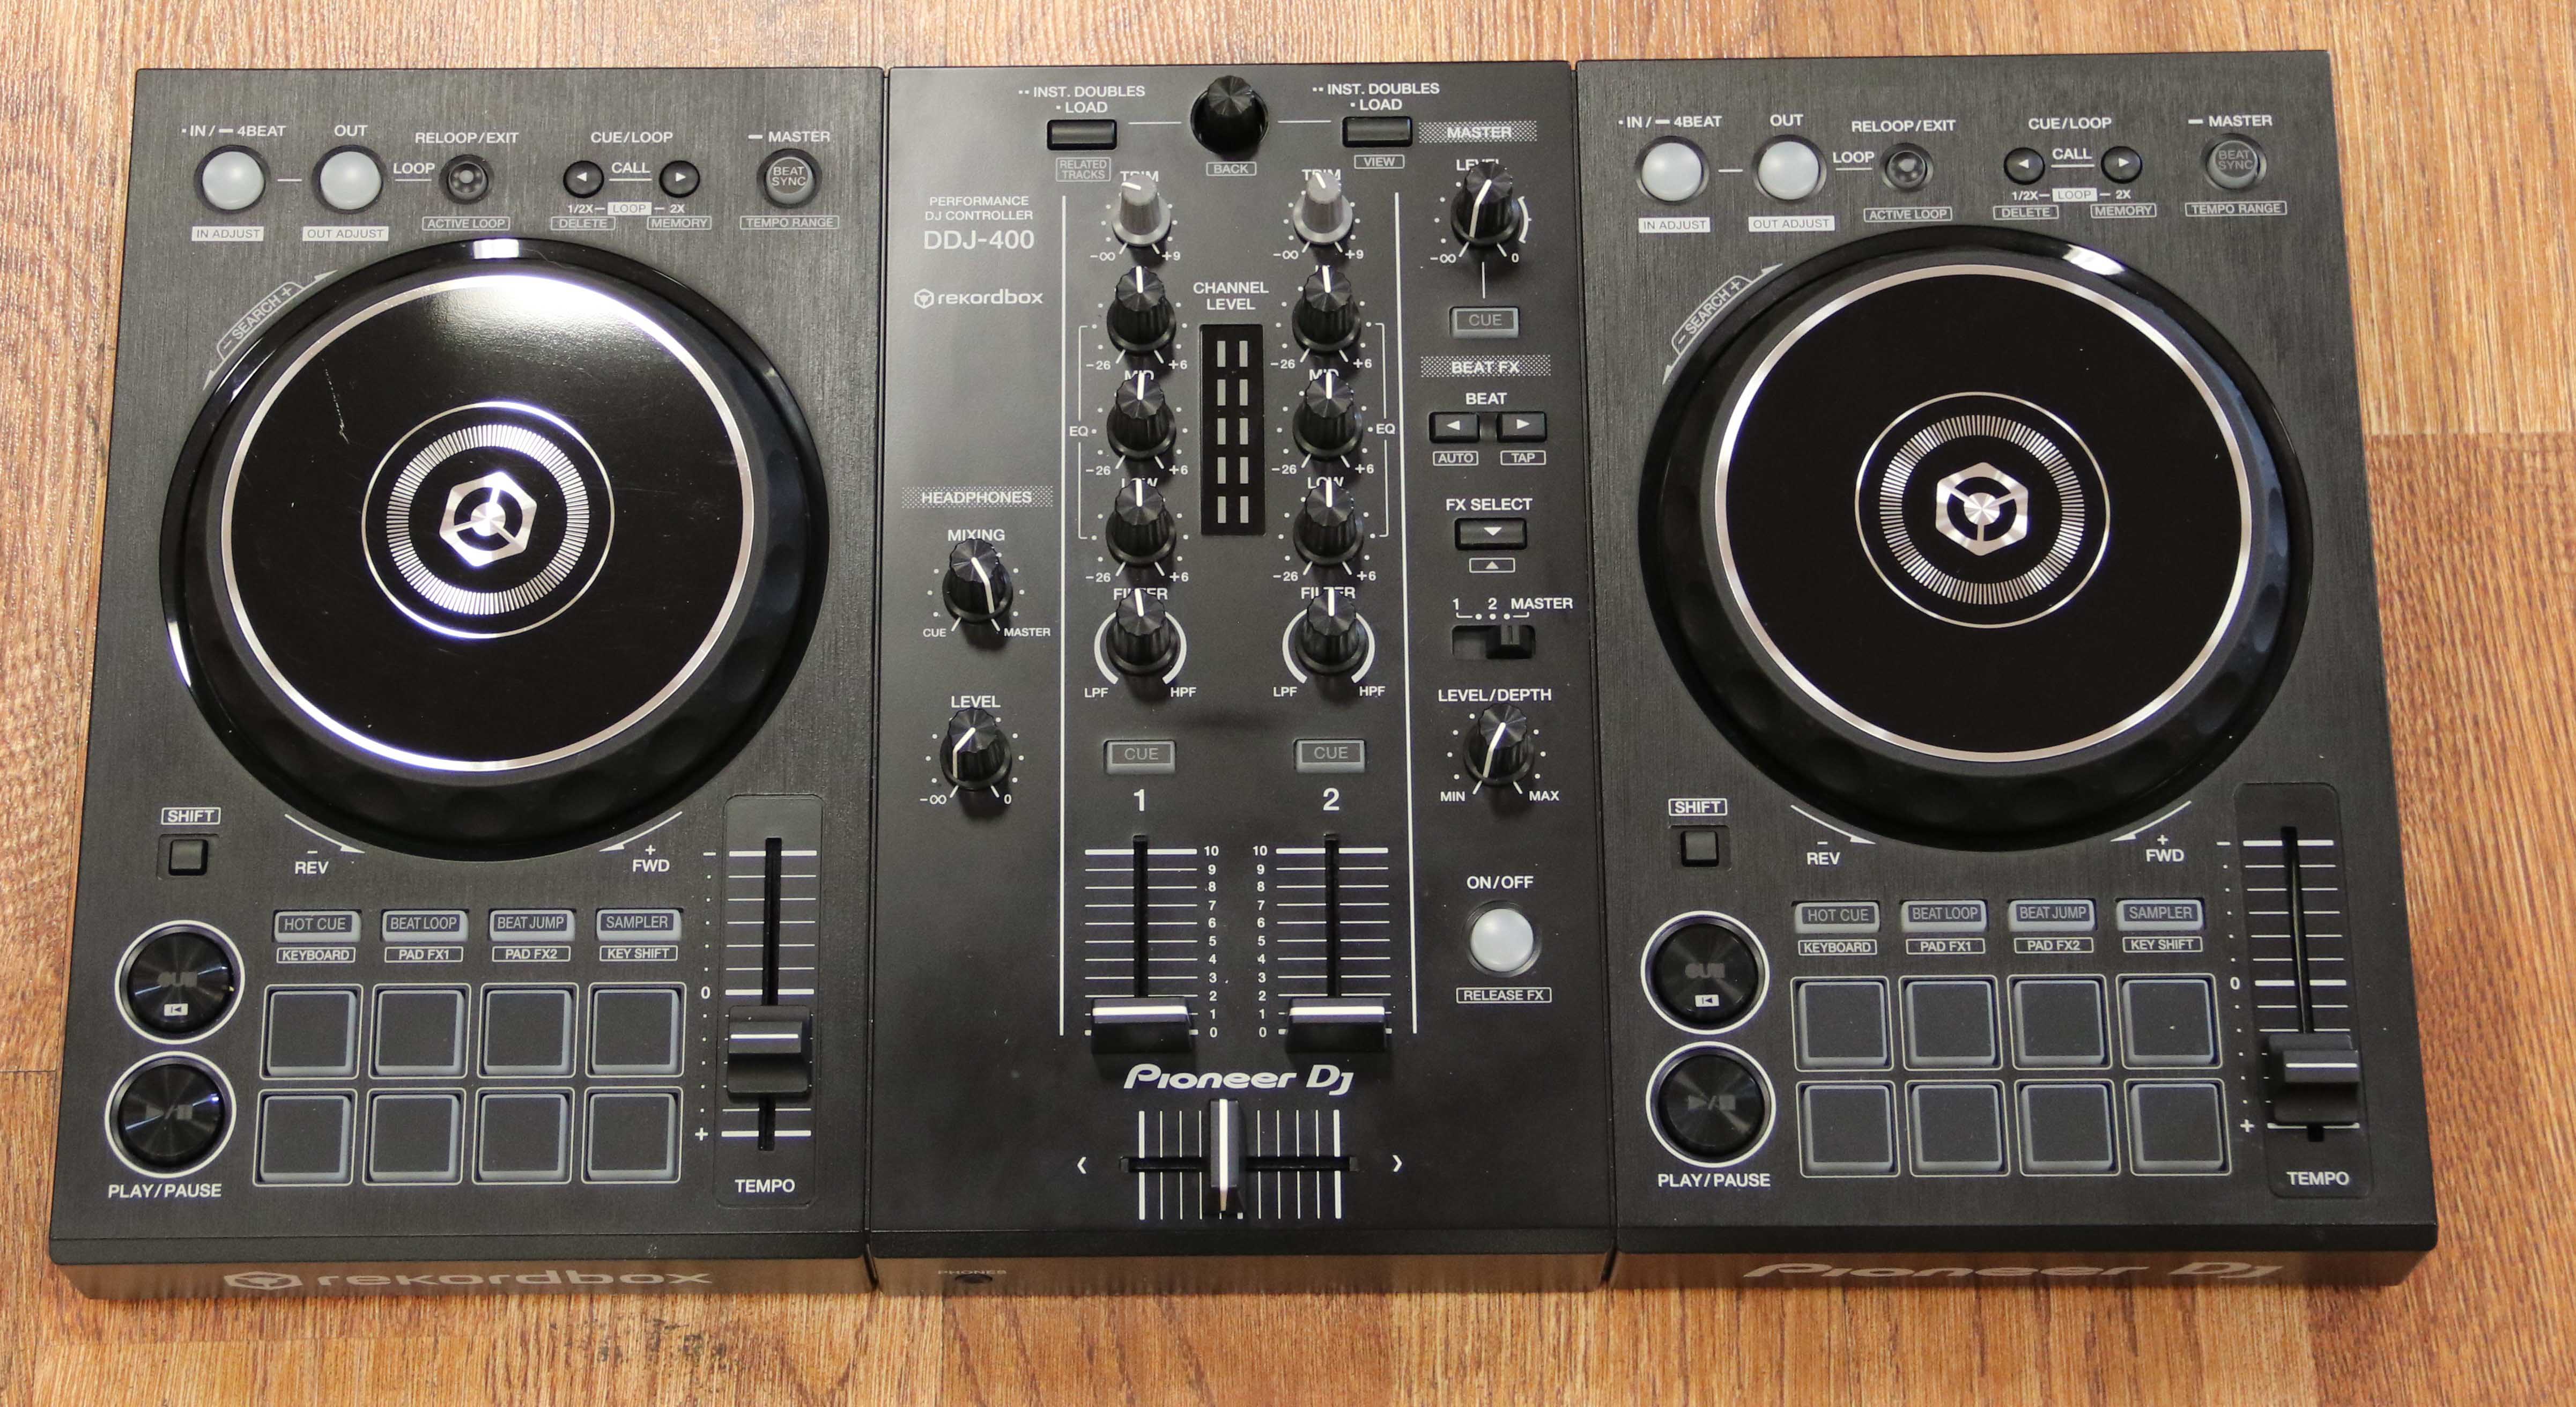  Pioneer DDJ 400 2 Channel DJ Controller For Rekordbox DJ EBay